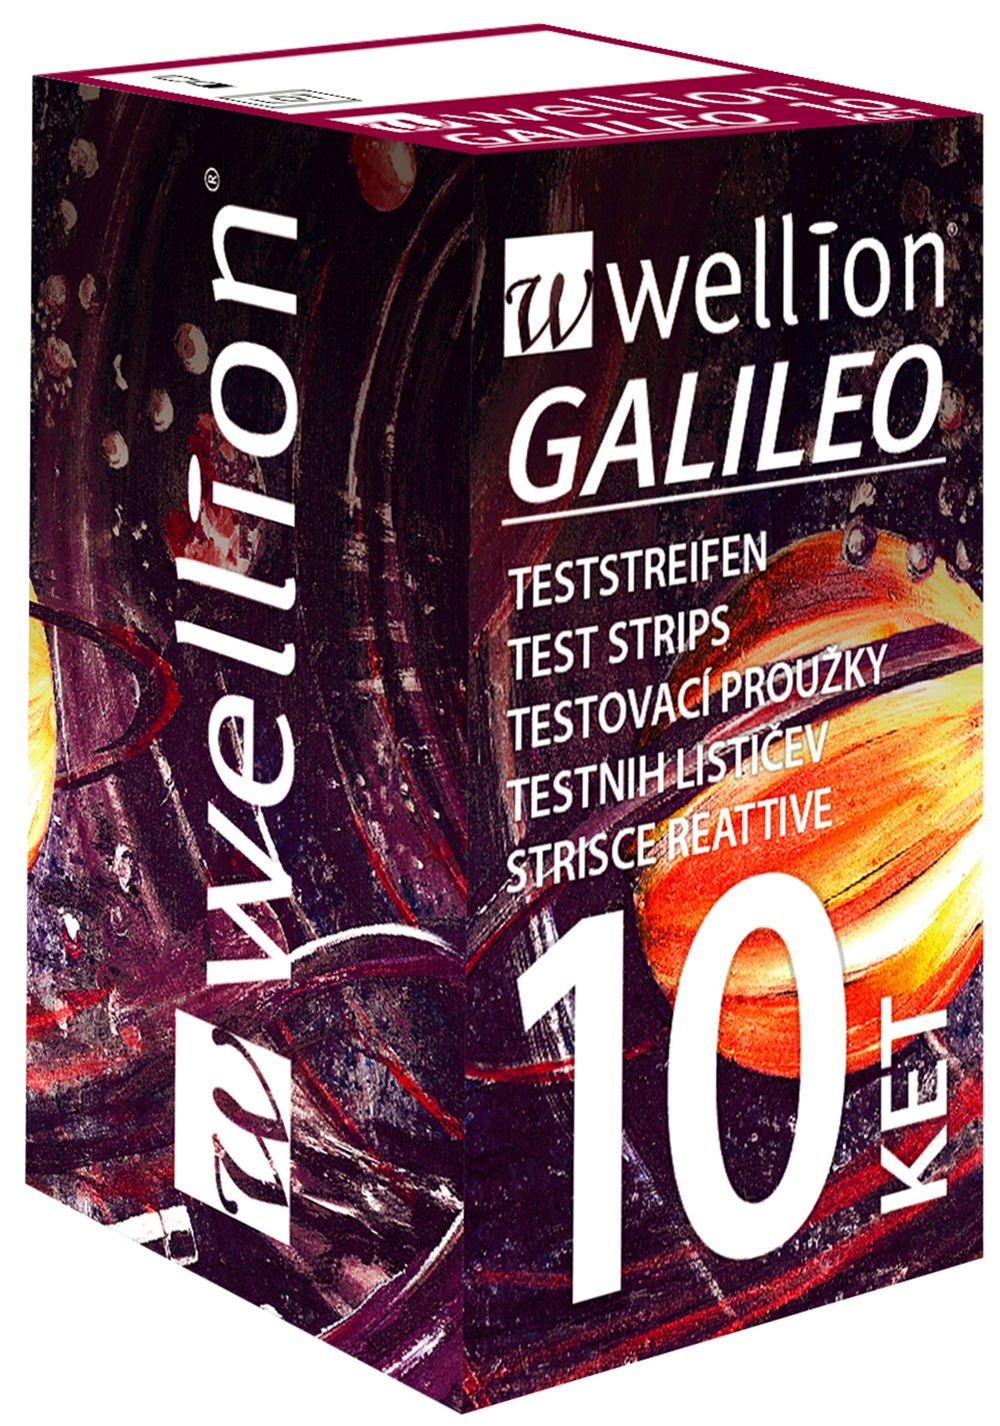 Teststicka blodketoner - Wellion Galileo - 10 st